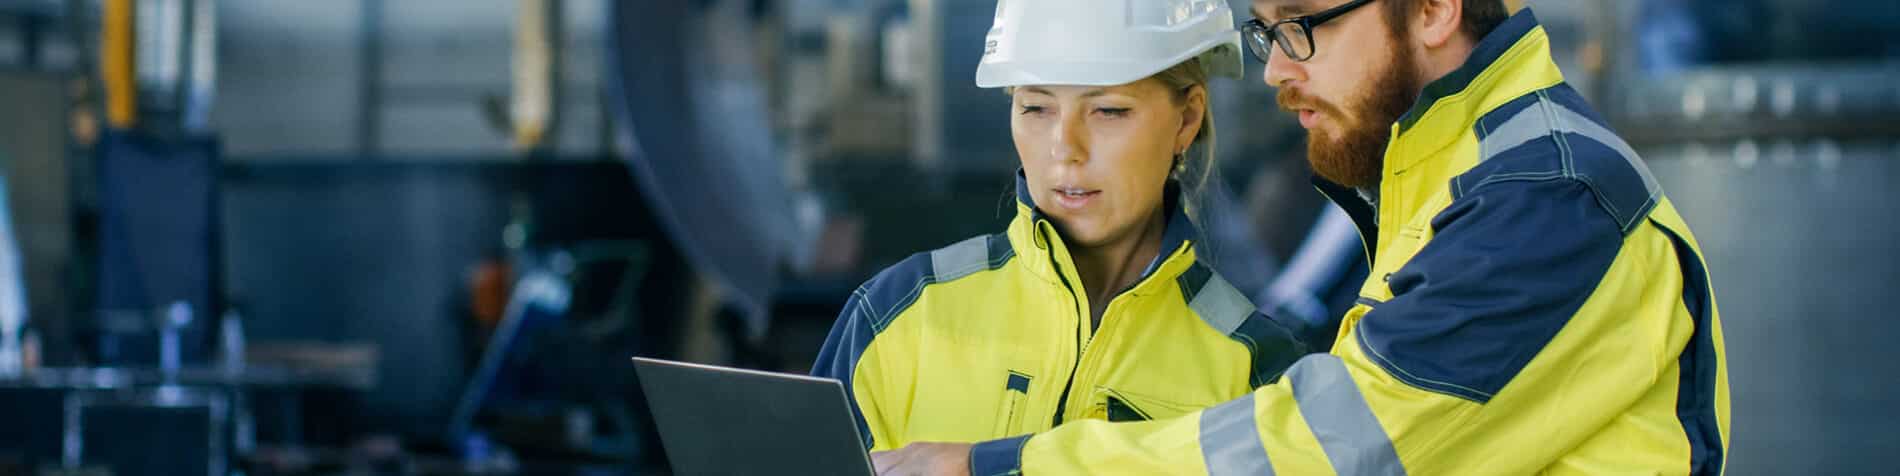 IoT Saves Lives in Hazardous Work Environments